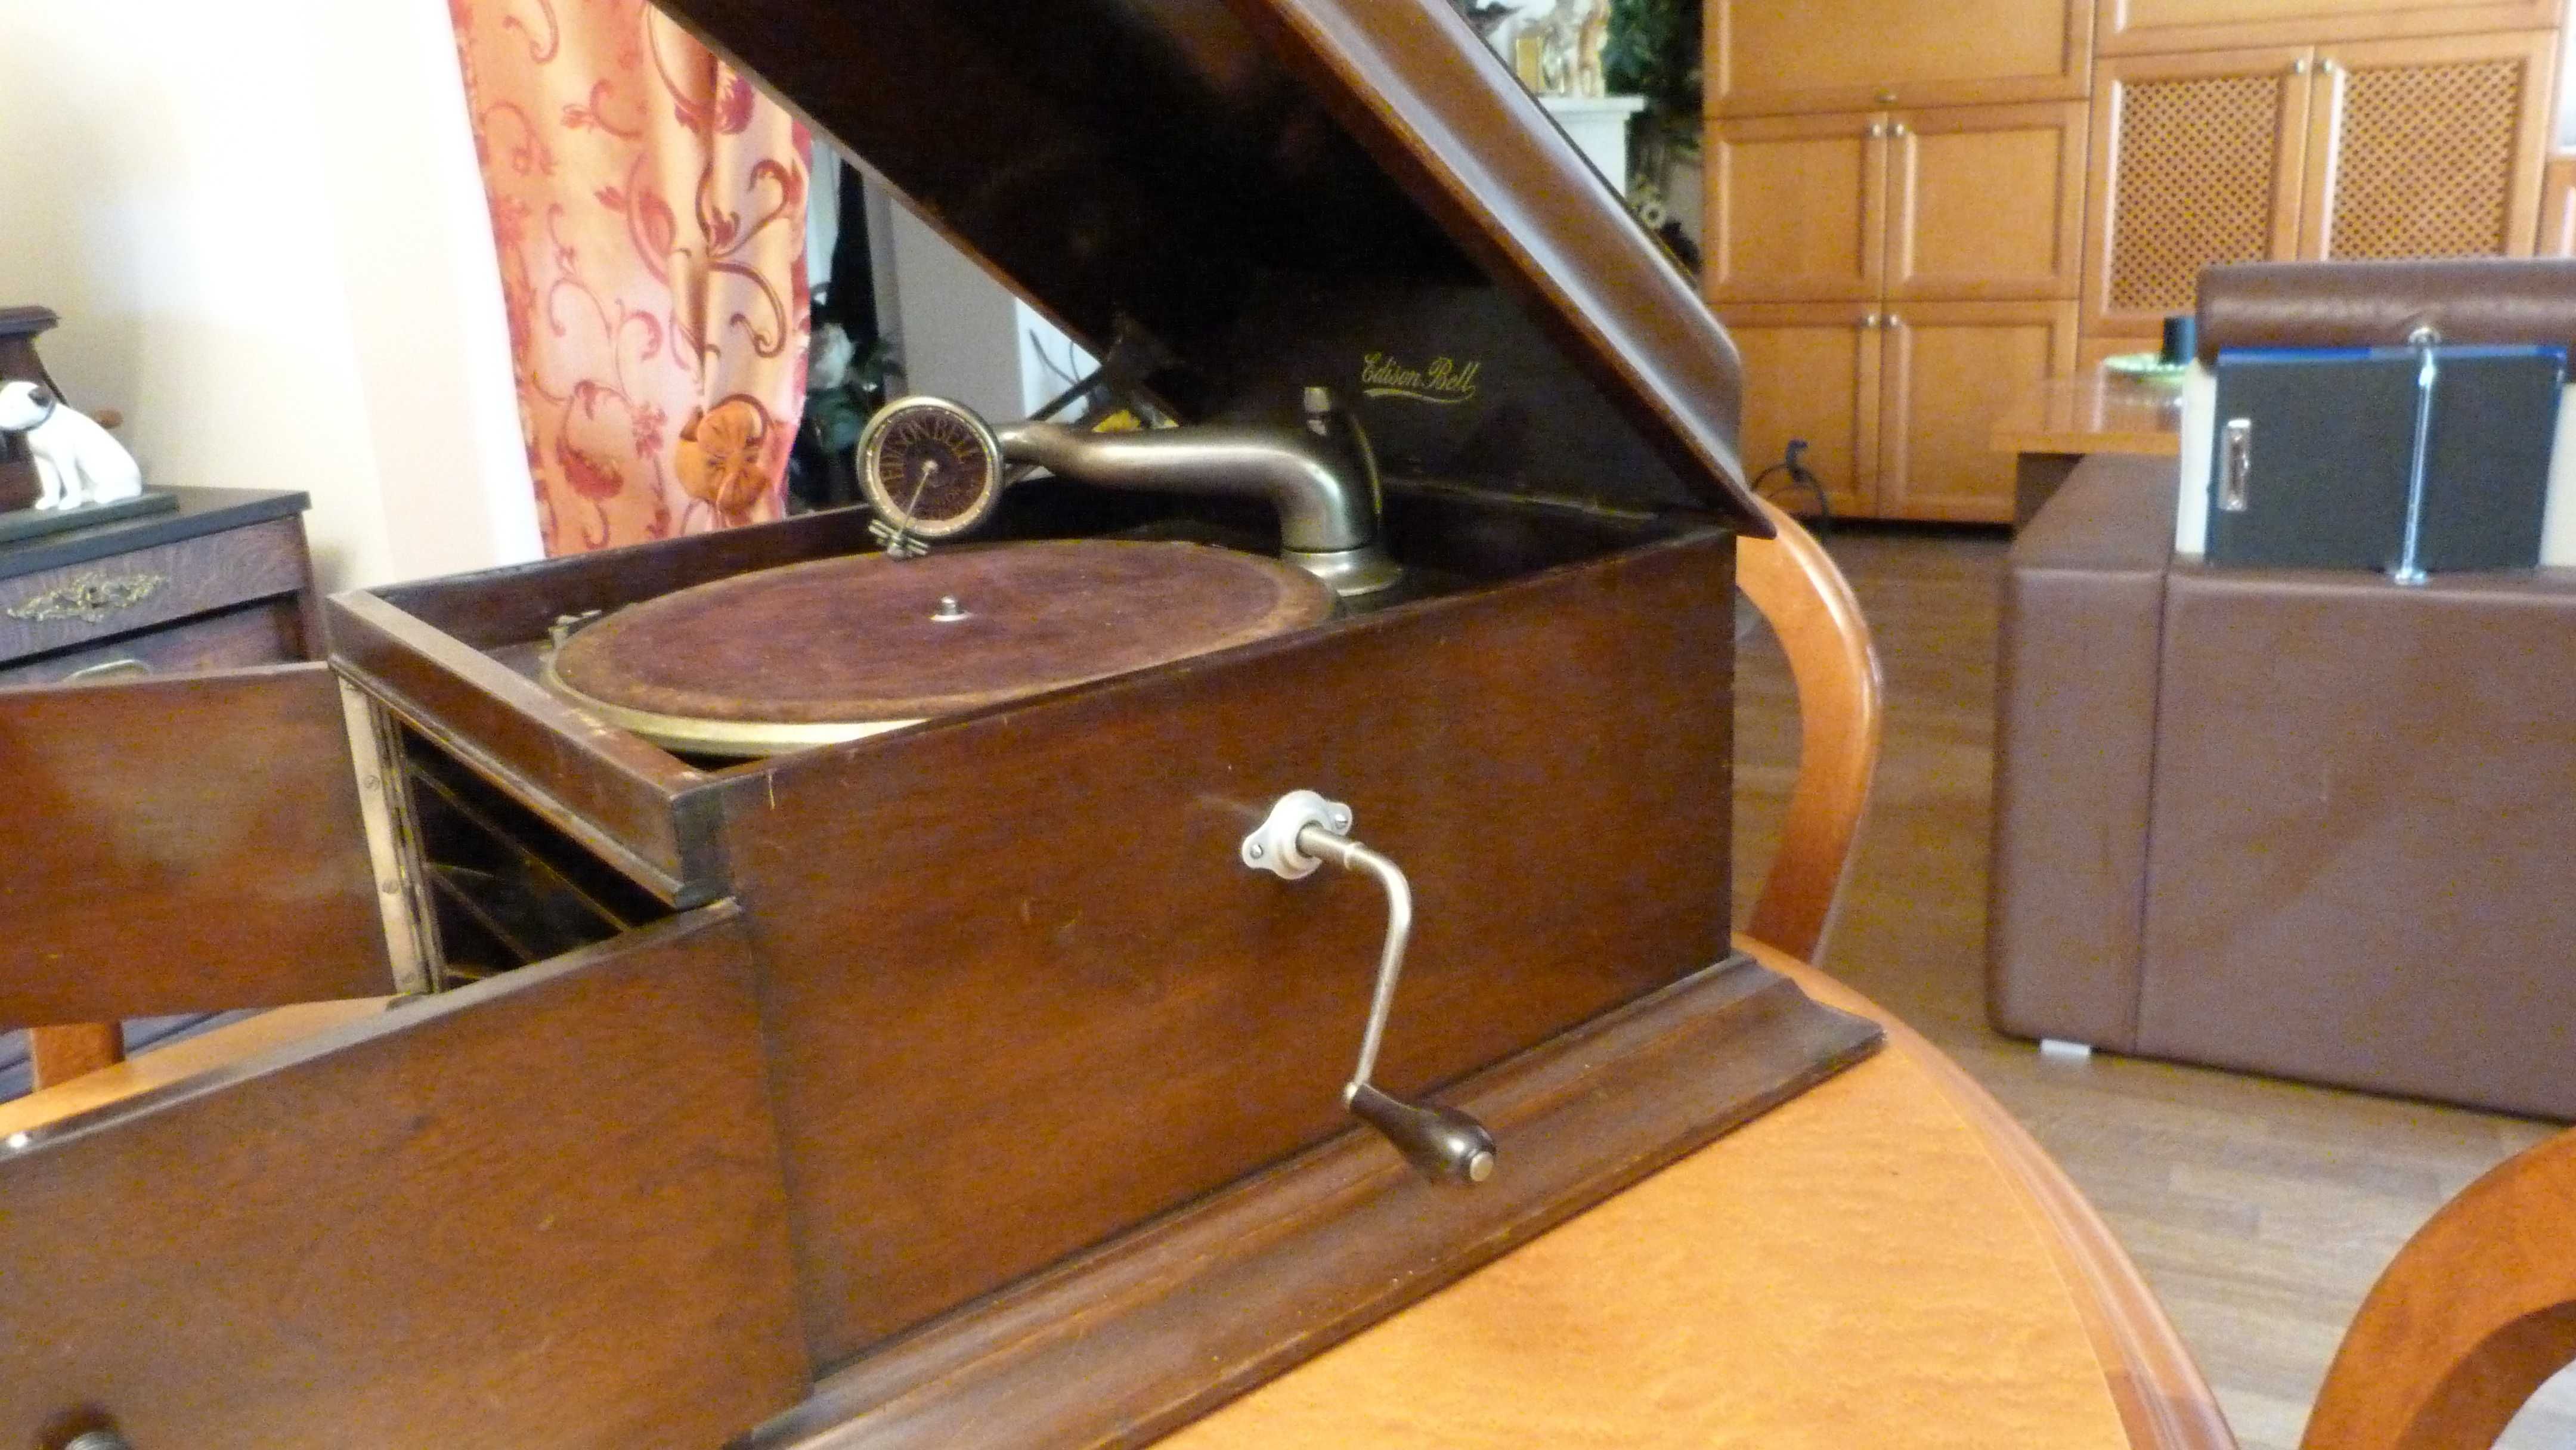 Gramofon Edison Bell